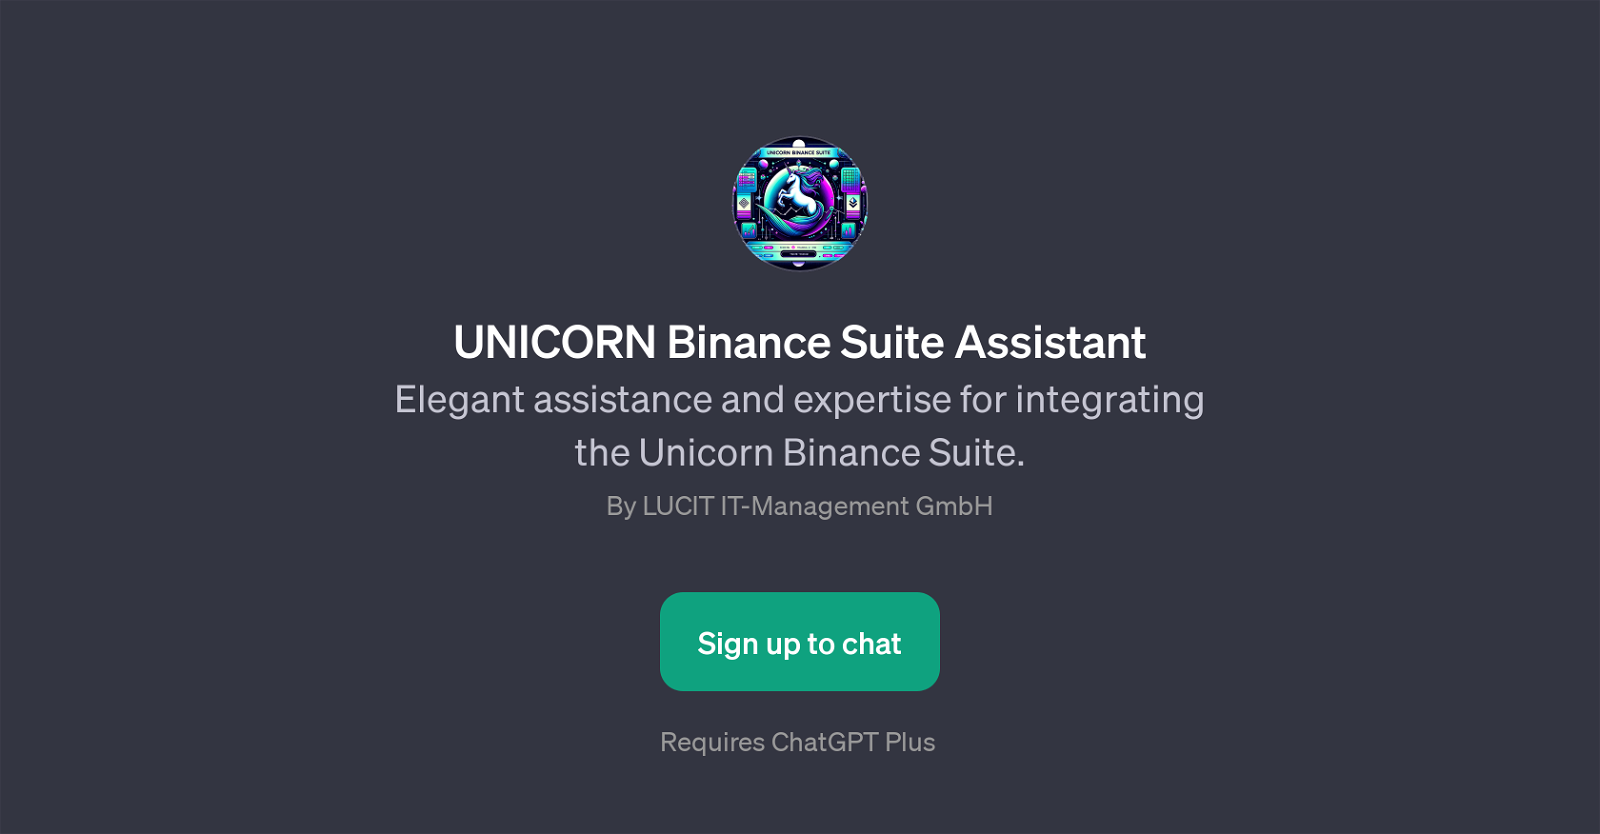 UNICORN Binance Suite Assistant website